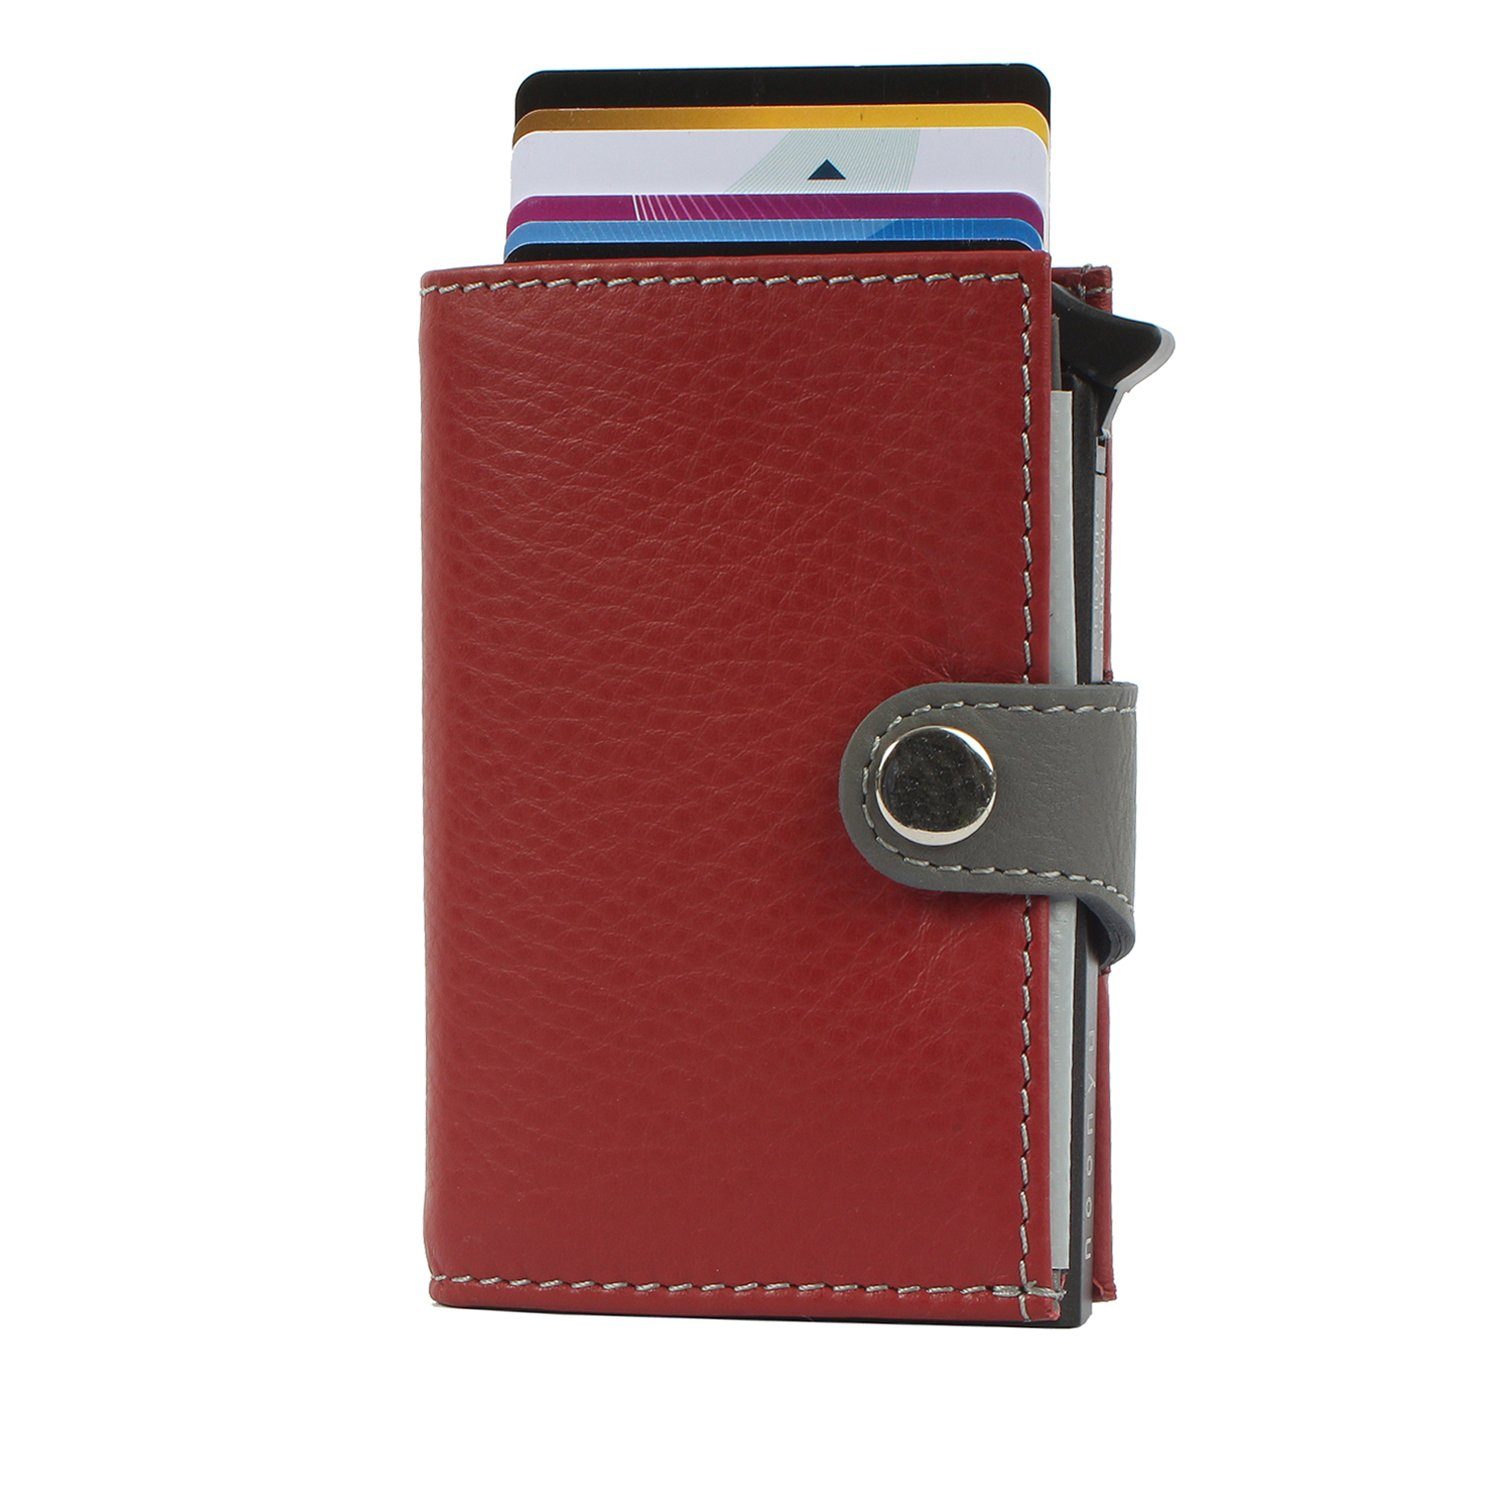 karminrot Leder Margelisch Kreditkartenbörse Mini aus single Upcycling leather, noonyu Geldbörse